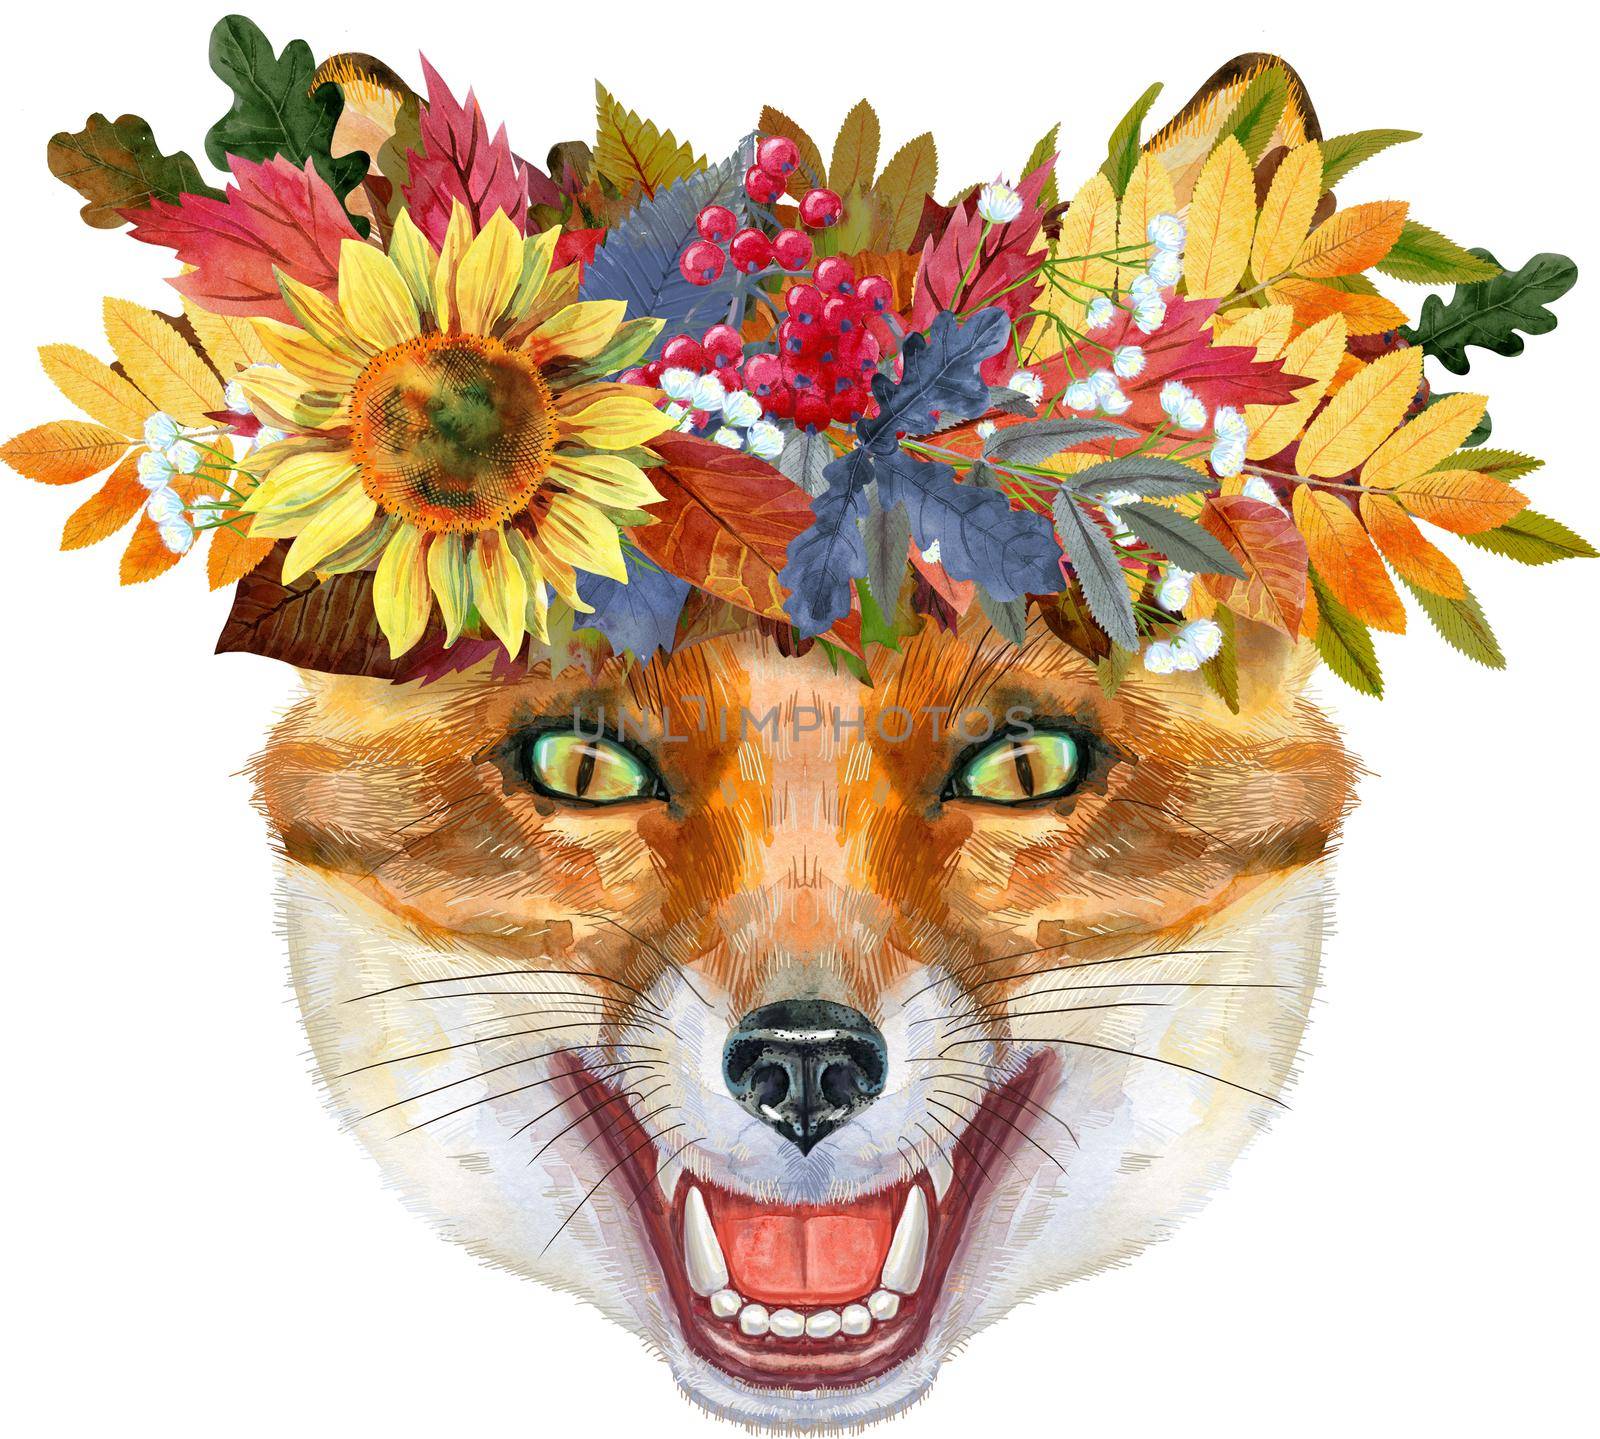 Fox portrait in a wreath of autumn leaves. Watercolor orange fox painting illustration. Beautiful wildlife world